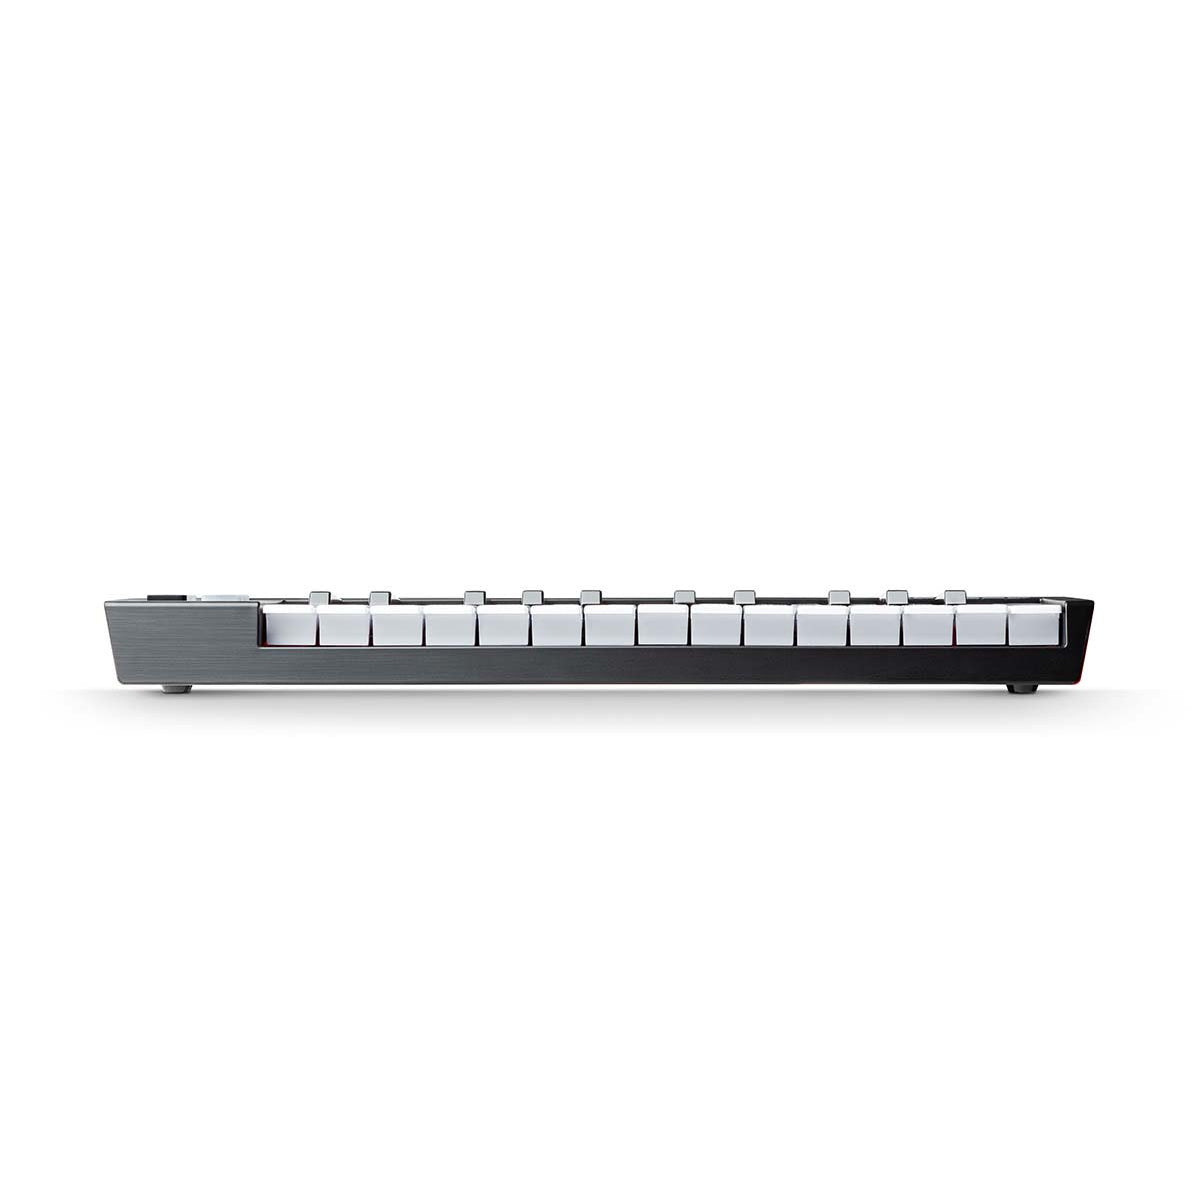 MIDI Keyboard Controller Akai LPK25 Wireless - Việt Music